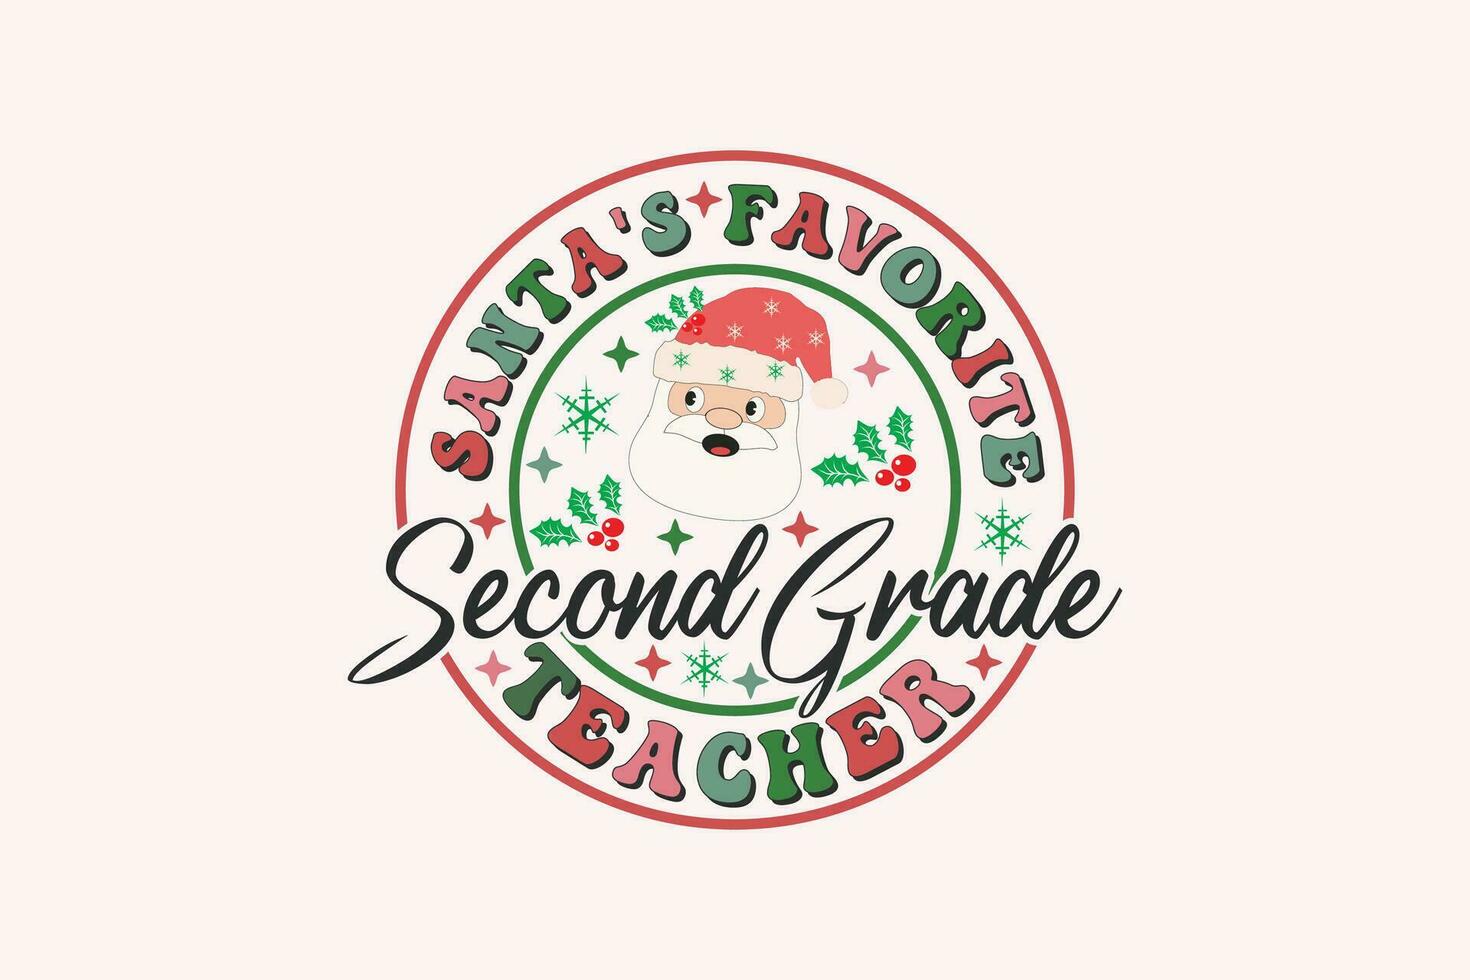 Santa's Favorite Second Grade Teacher Christmas Retro Typography T-shirt design vector